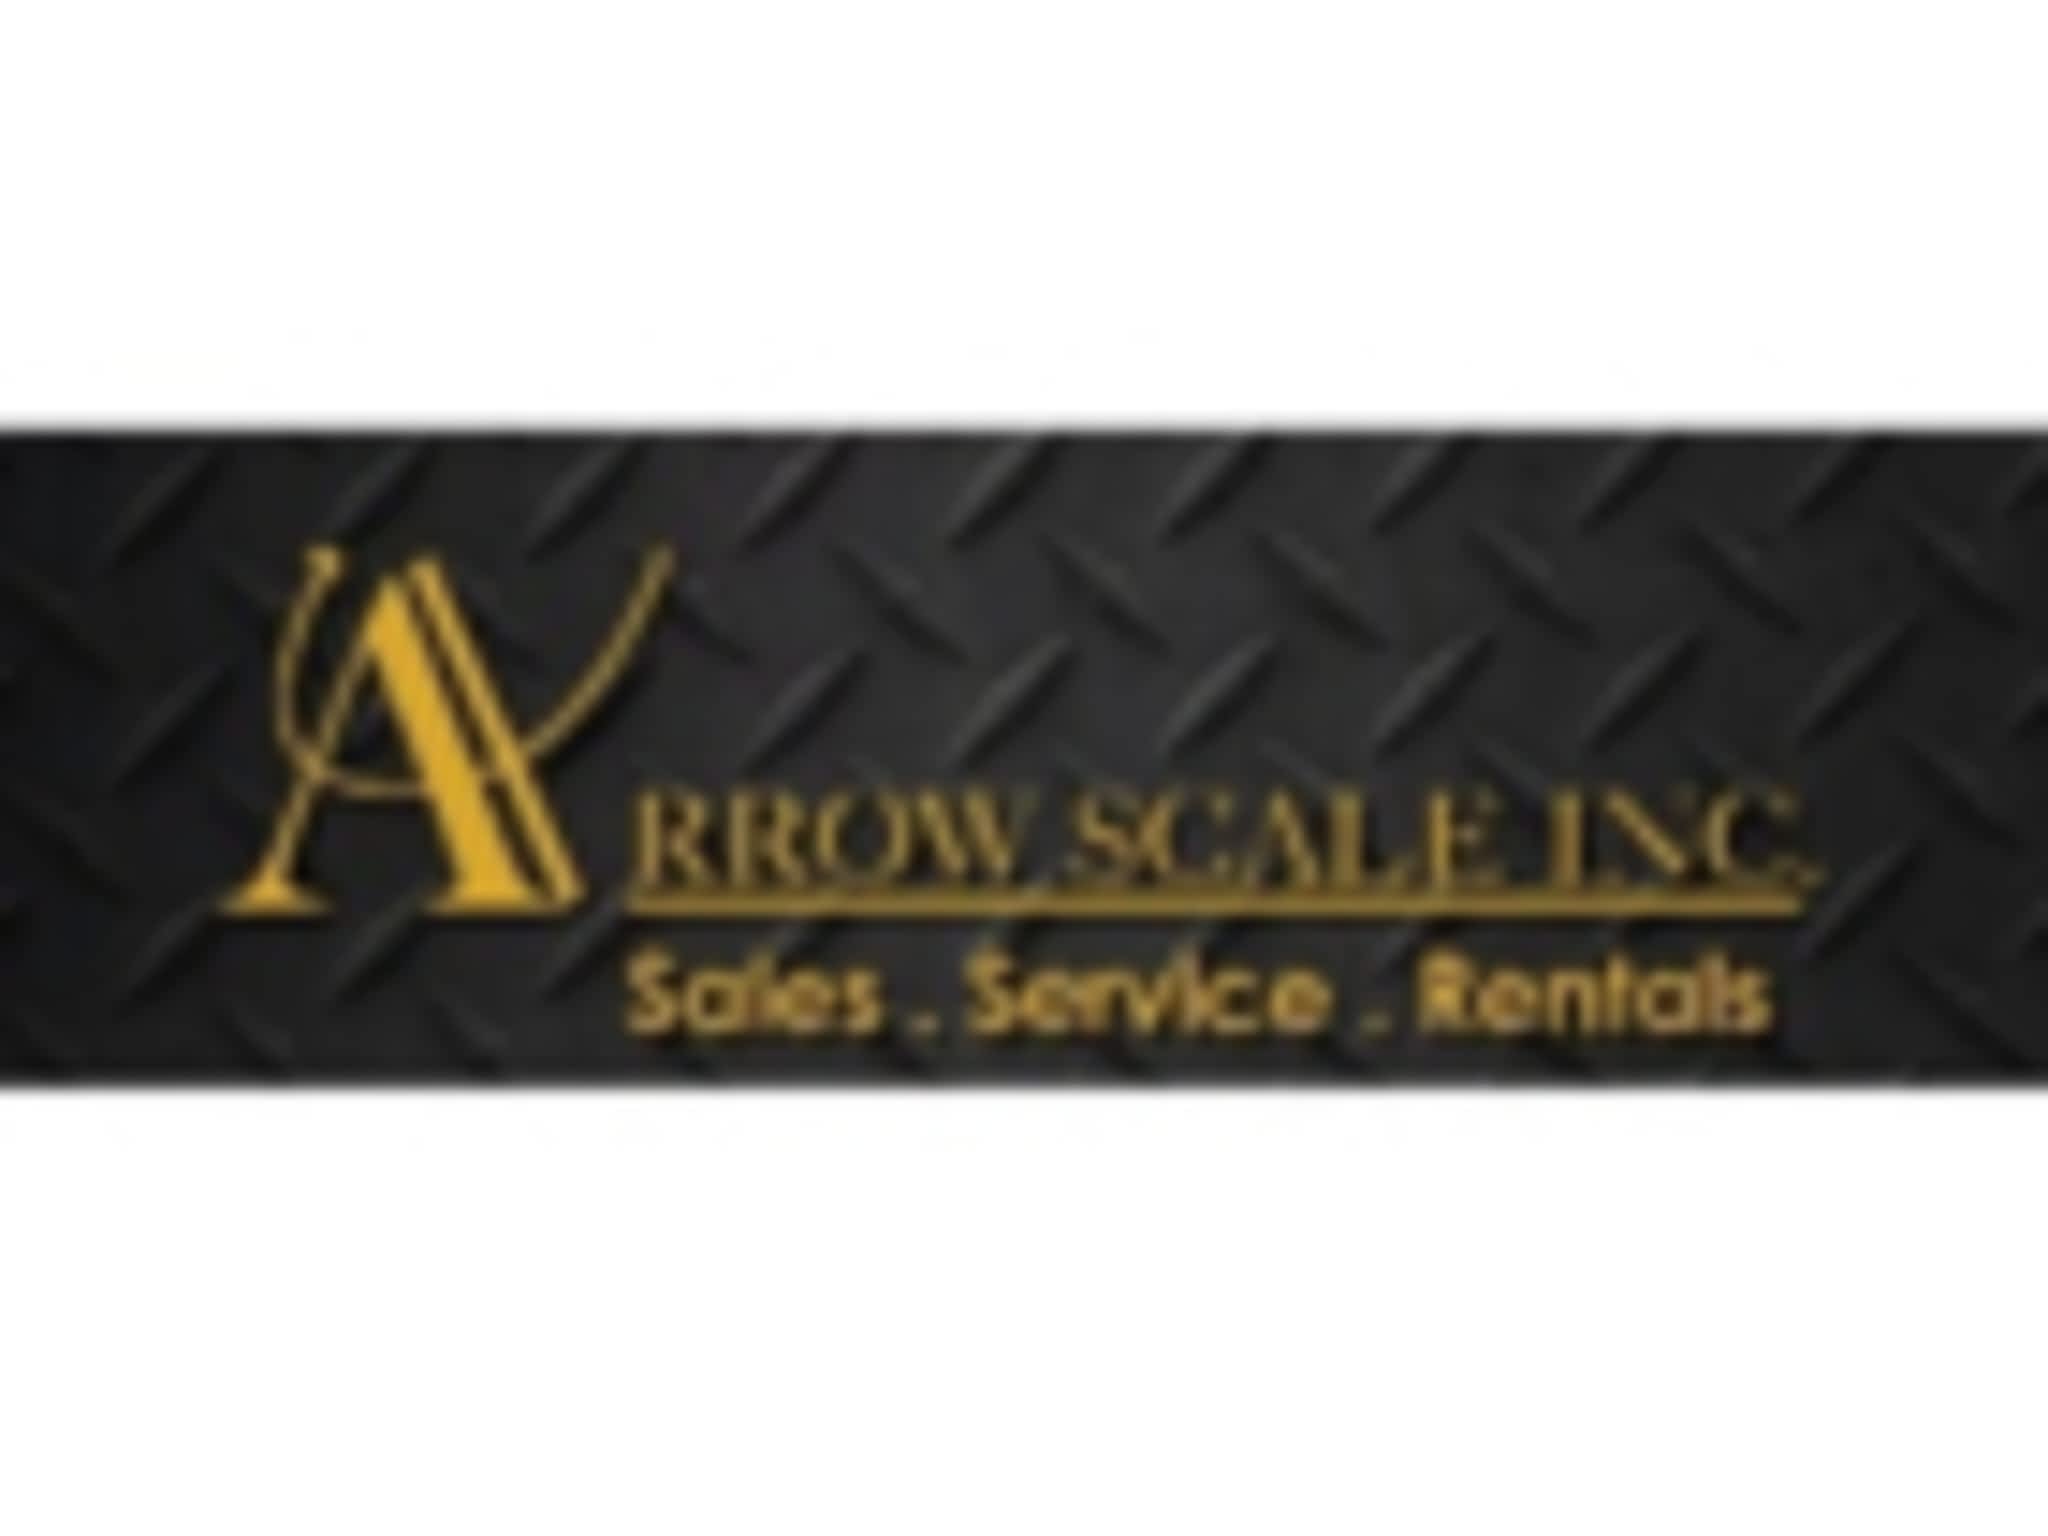 photo Arrow Scale Inc.